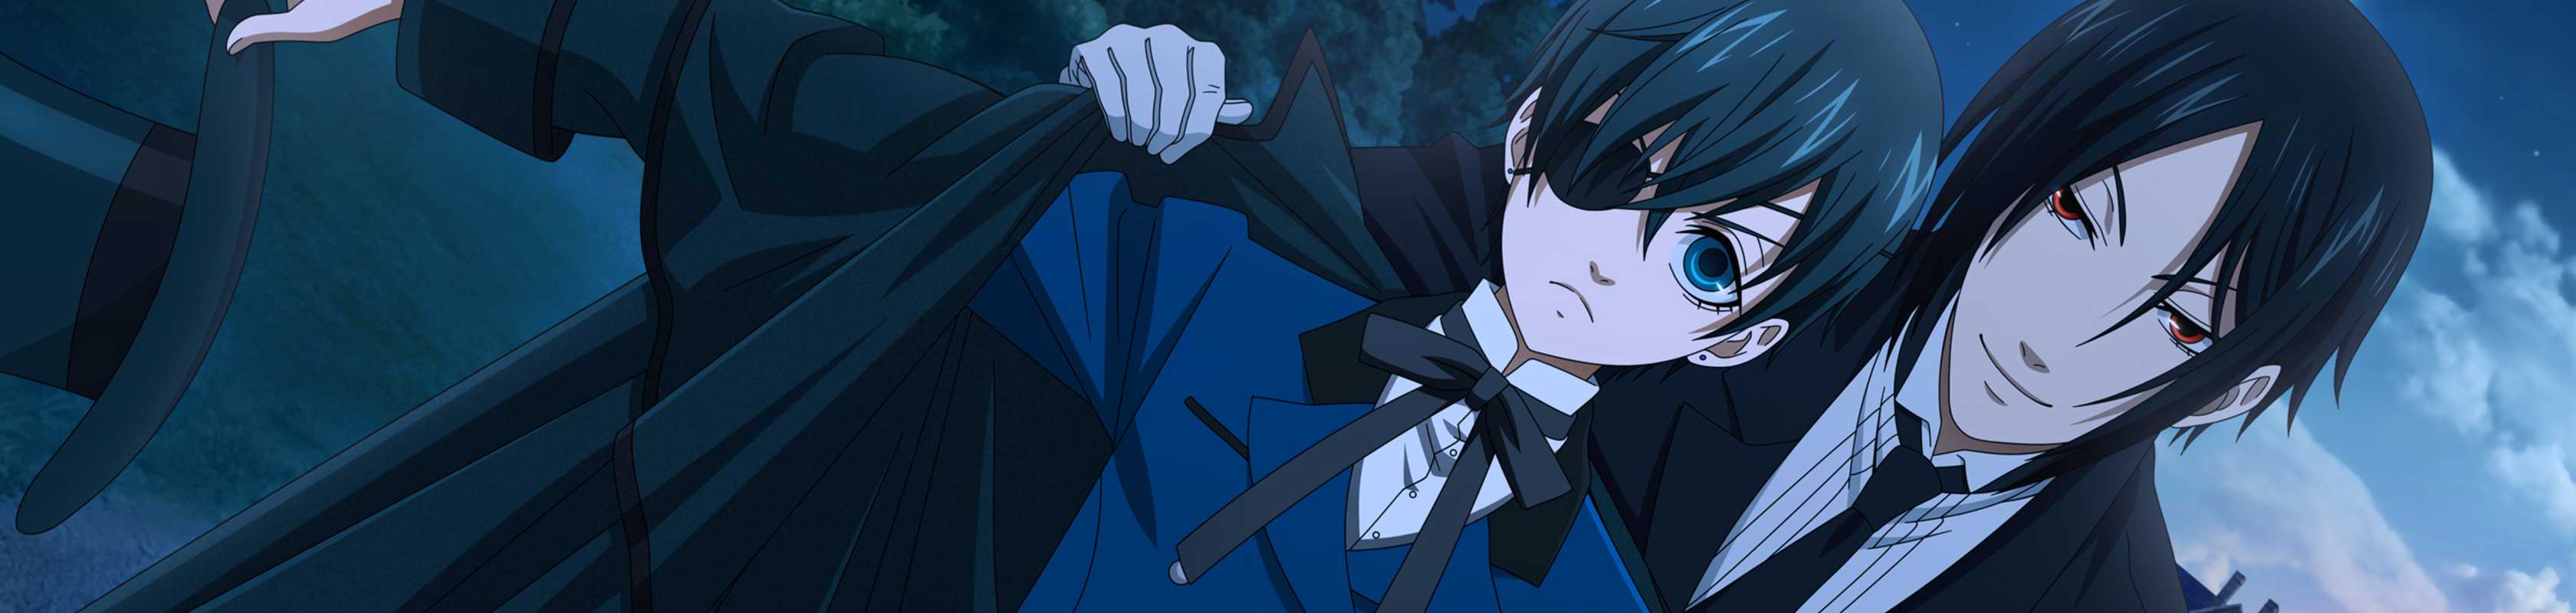 Kuroshitsuji (Black Butler) · AniList